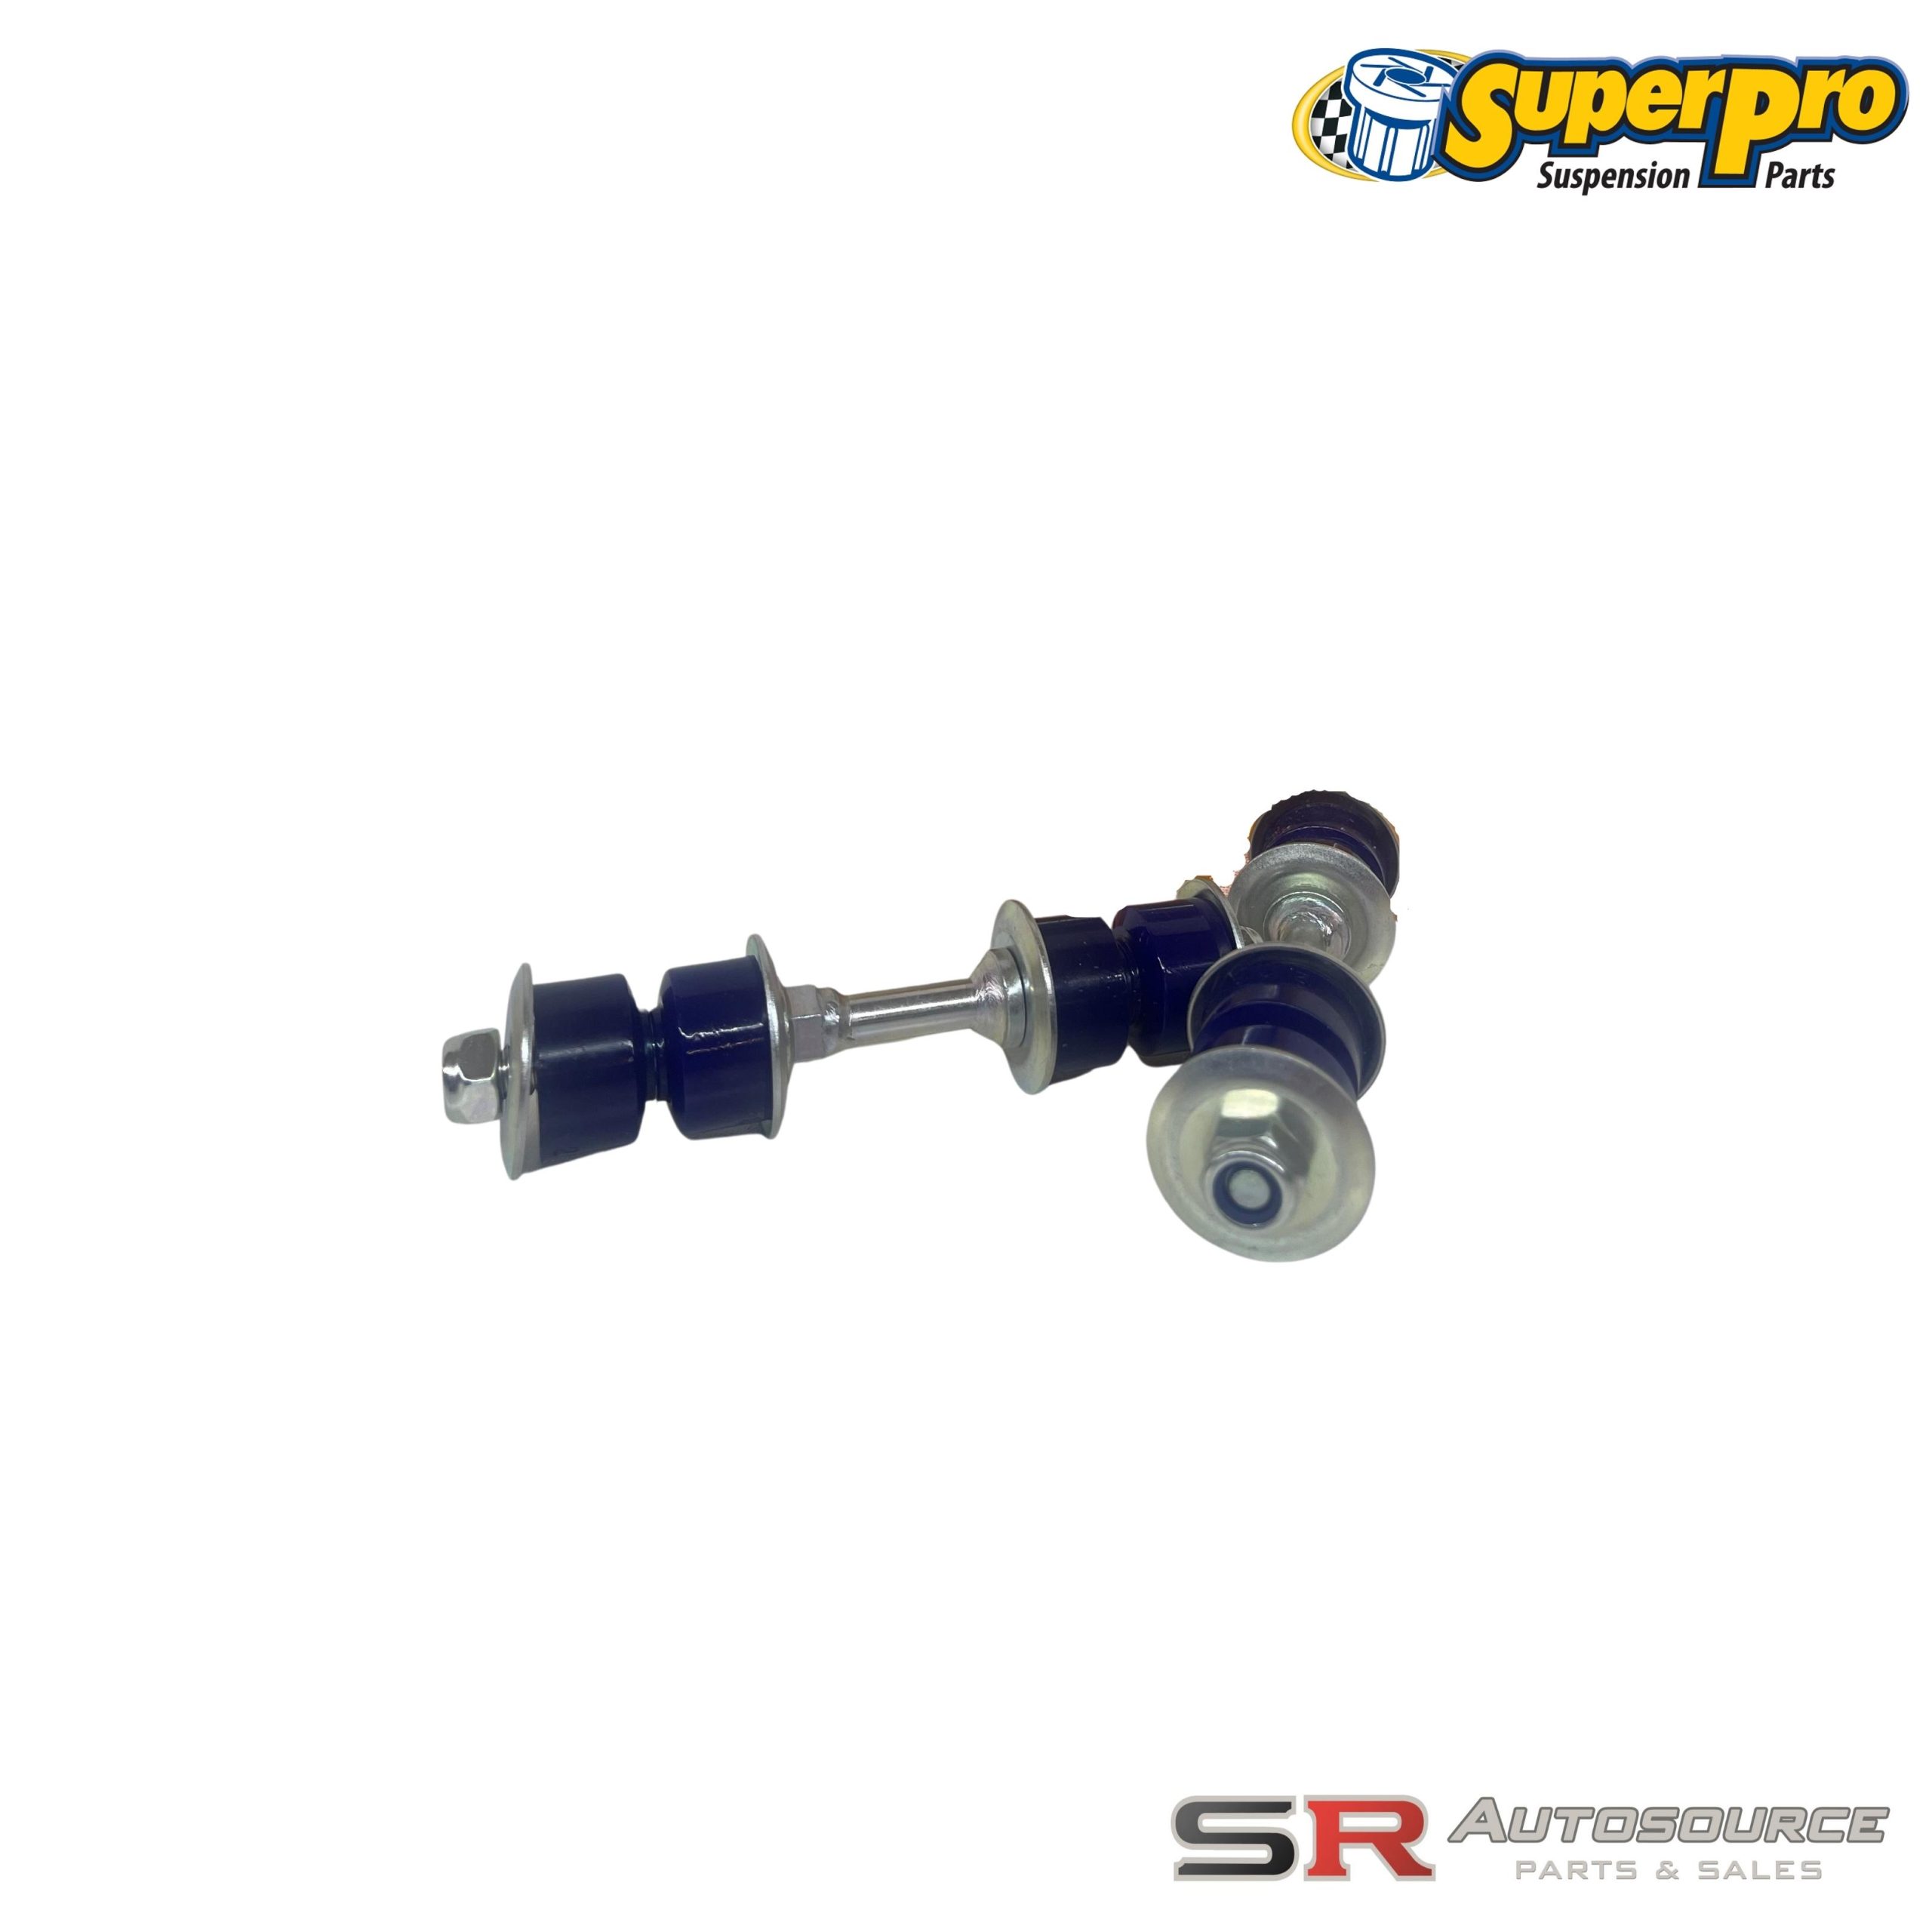 Complete Skyline R32 GTST GTR Rear ARB (Sway Bar) Drop Links w/ Superpro SPF2092BK